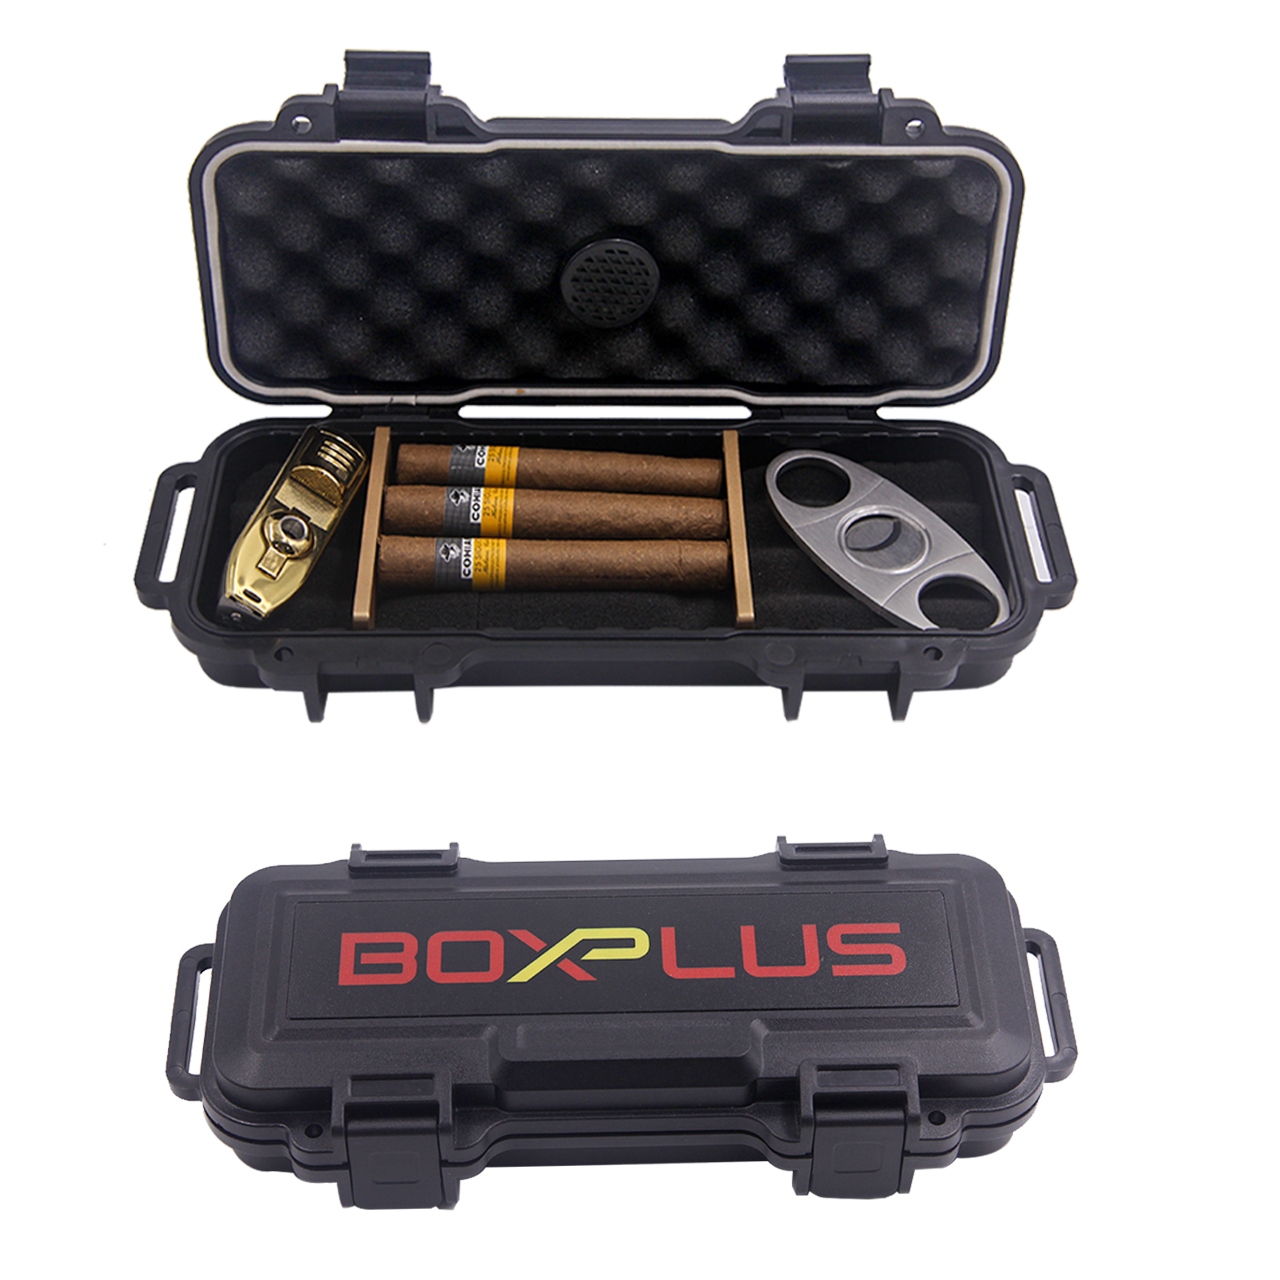 [BP-2307][230*75*40] New Arrival waterproof cigar humidor Cigar Humidors Travel portable cigar case with accessories